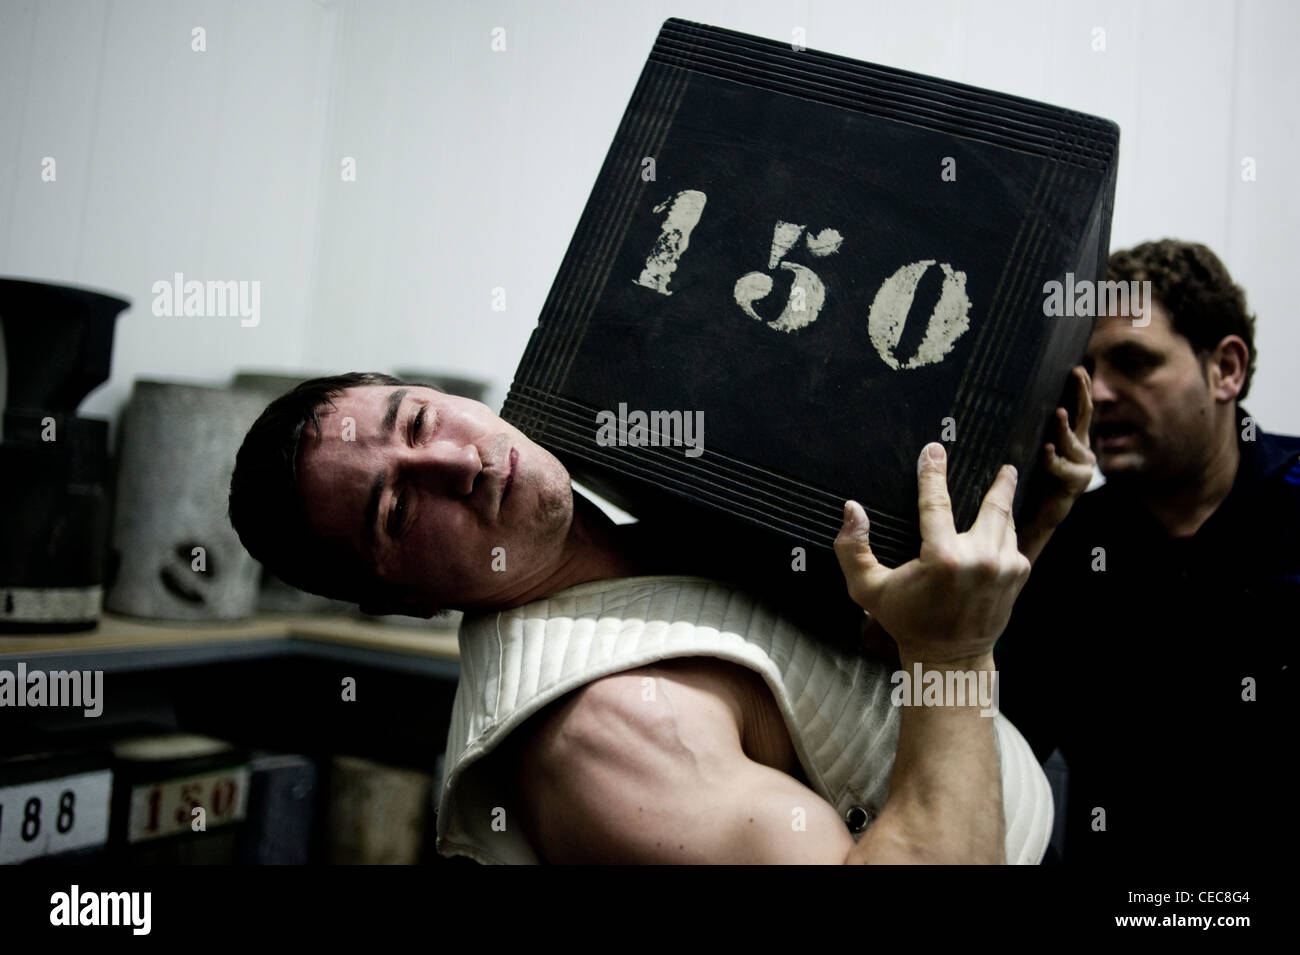 Josetxo Urrutia, stone lifter or harrijasotzaile in Basque language. He lifts a 150 kg stone during his training in Orio. Stock Photo